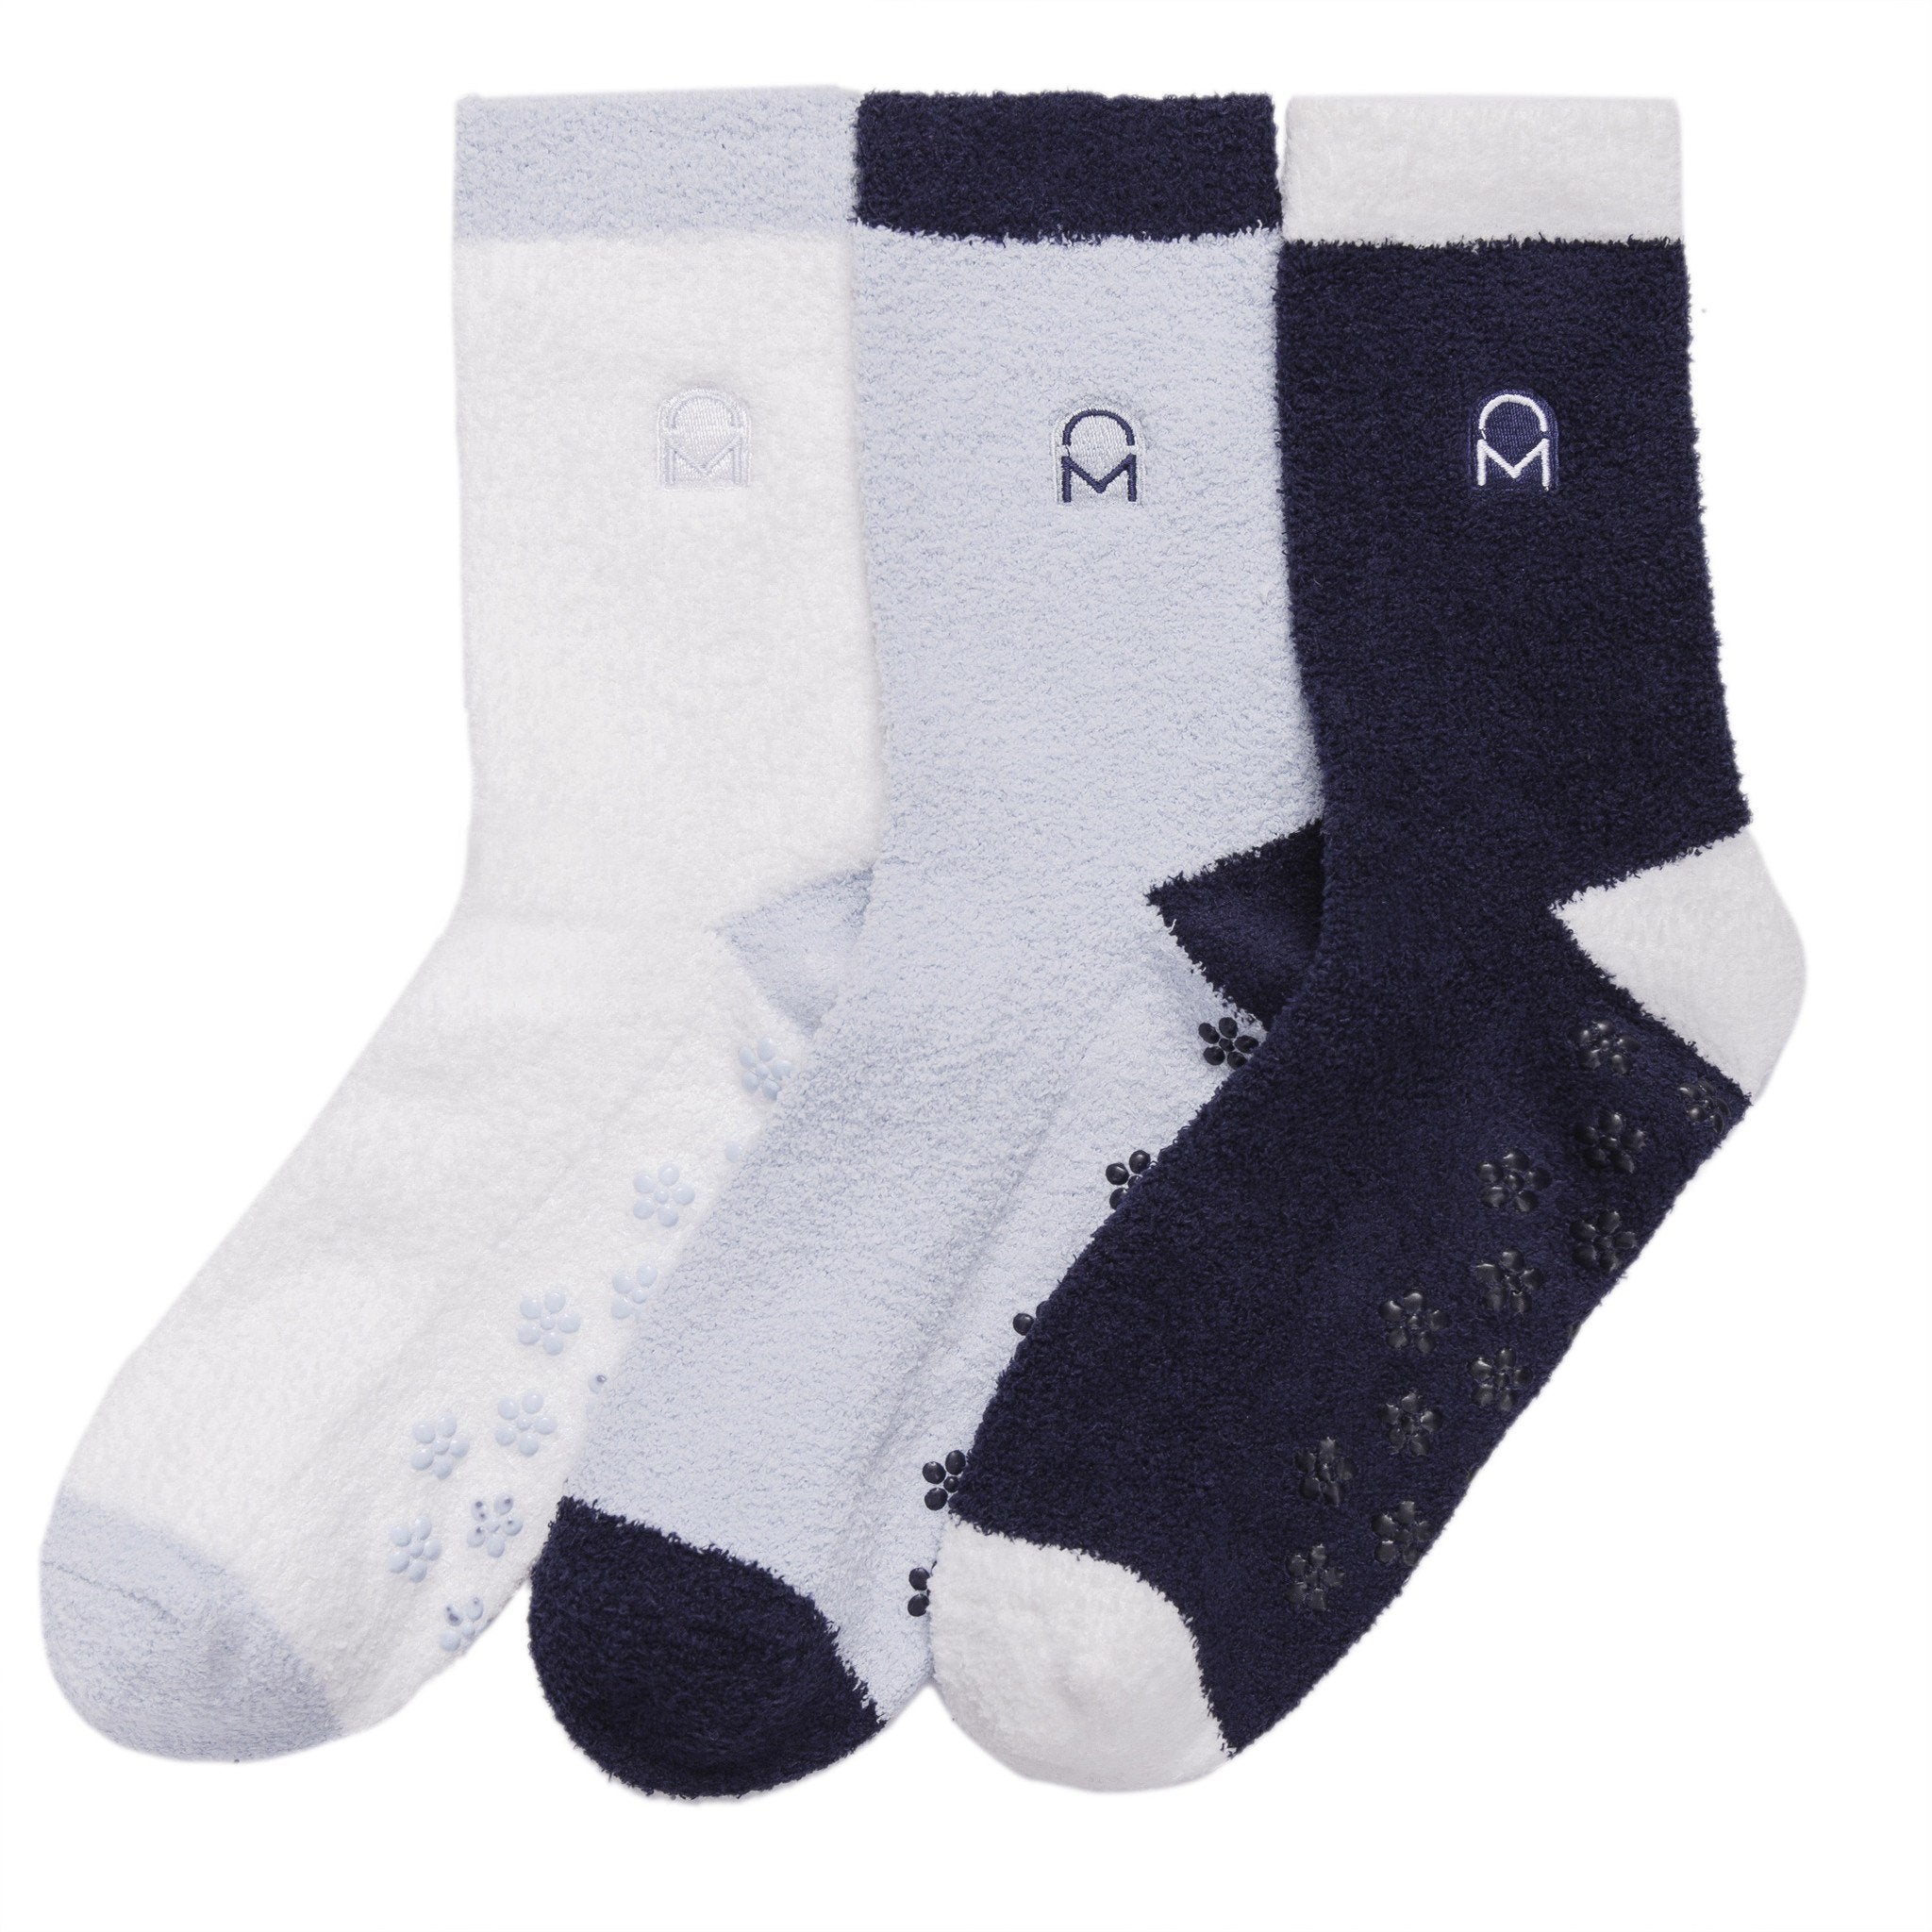 Women's Soft Anti-Skid Micro-Plush Winter Crew Socks - Set C4